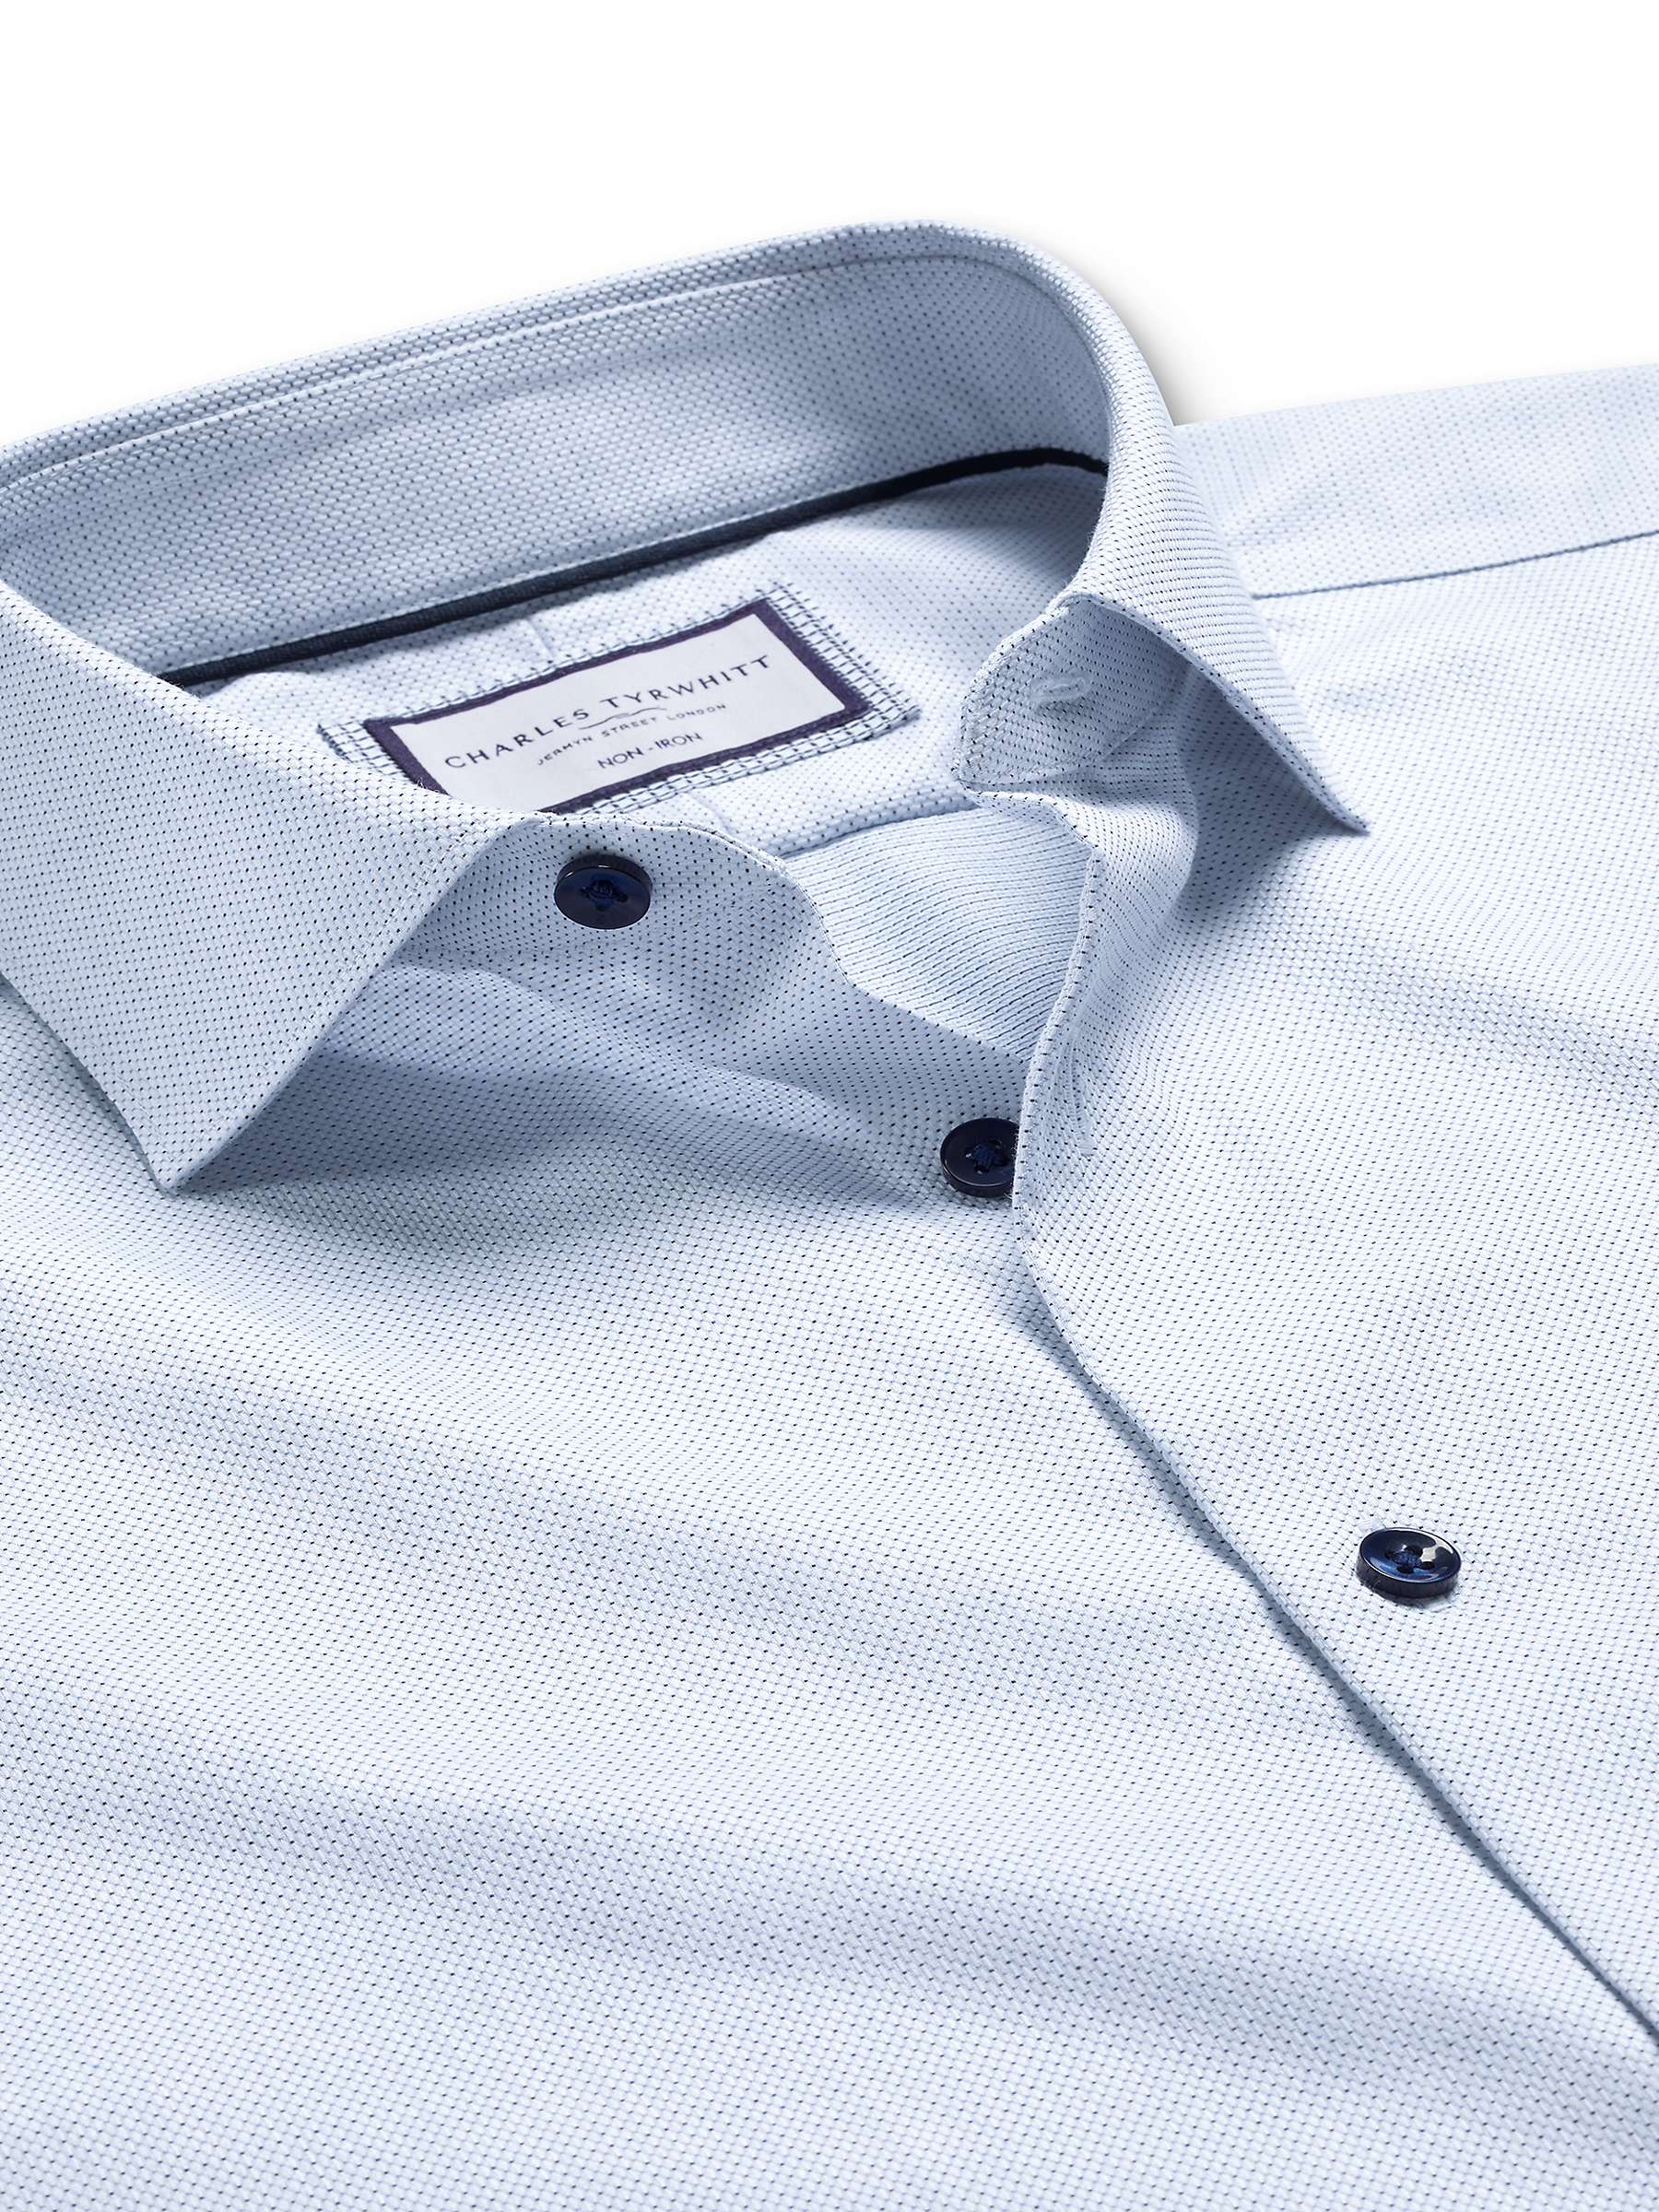 Buy Charles Tyrwhitt Dot Stretch Texture Slim Fit Shirt, White Online at johnlewis.com